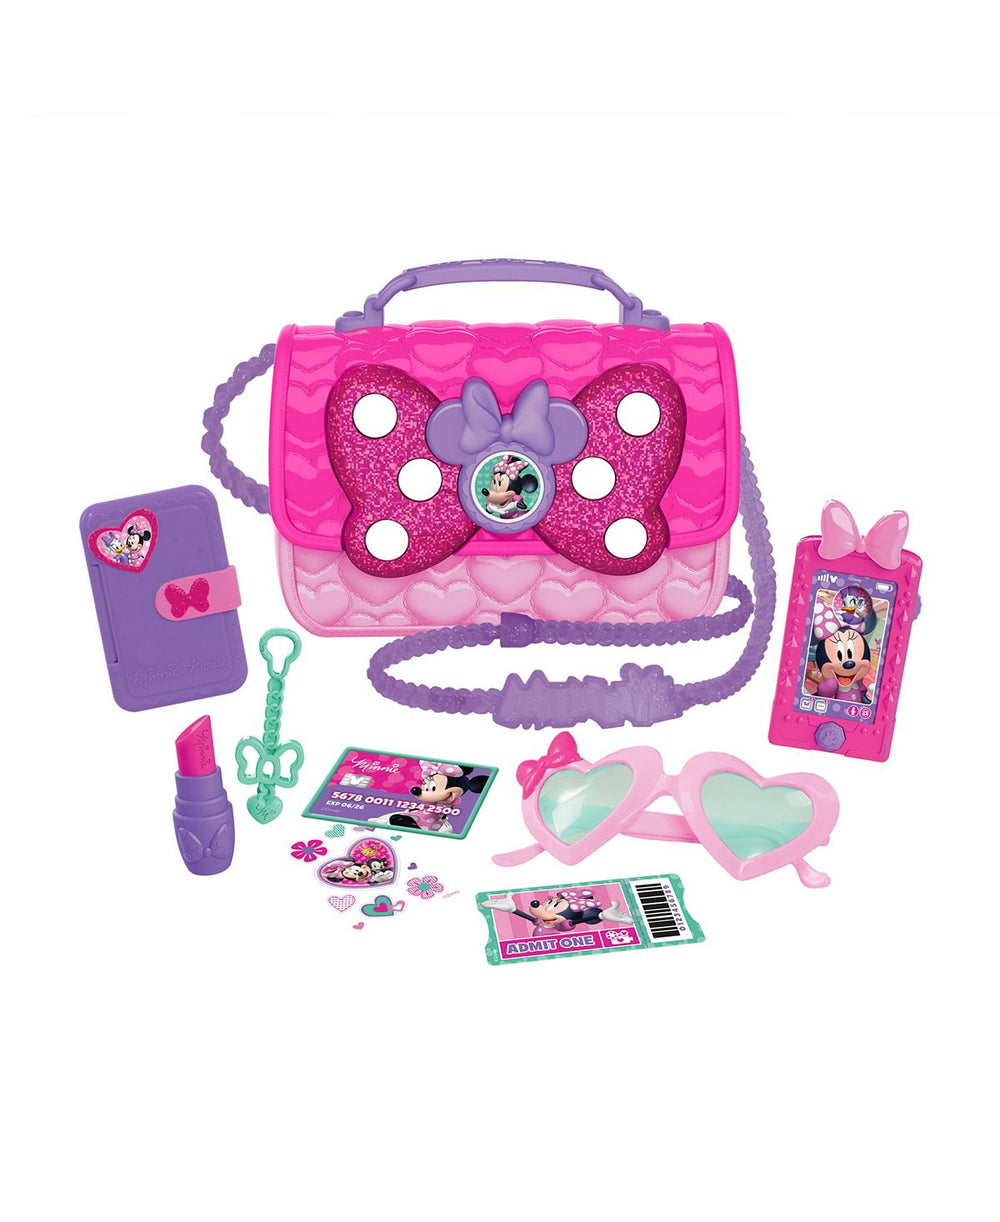 Disney Junior Minnie Mouse Happy Helpers Interactive Bag Set - Pink